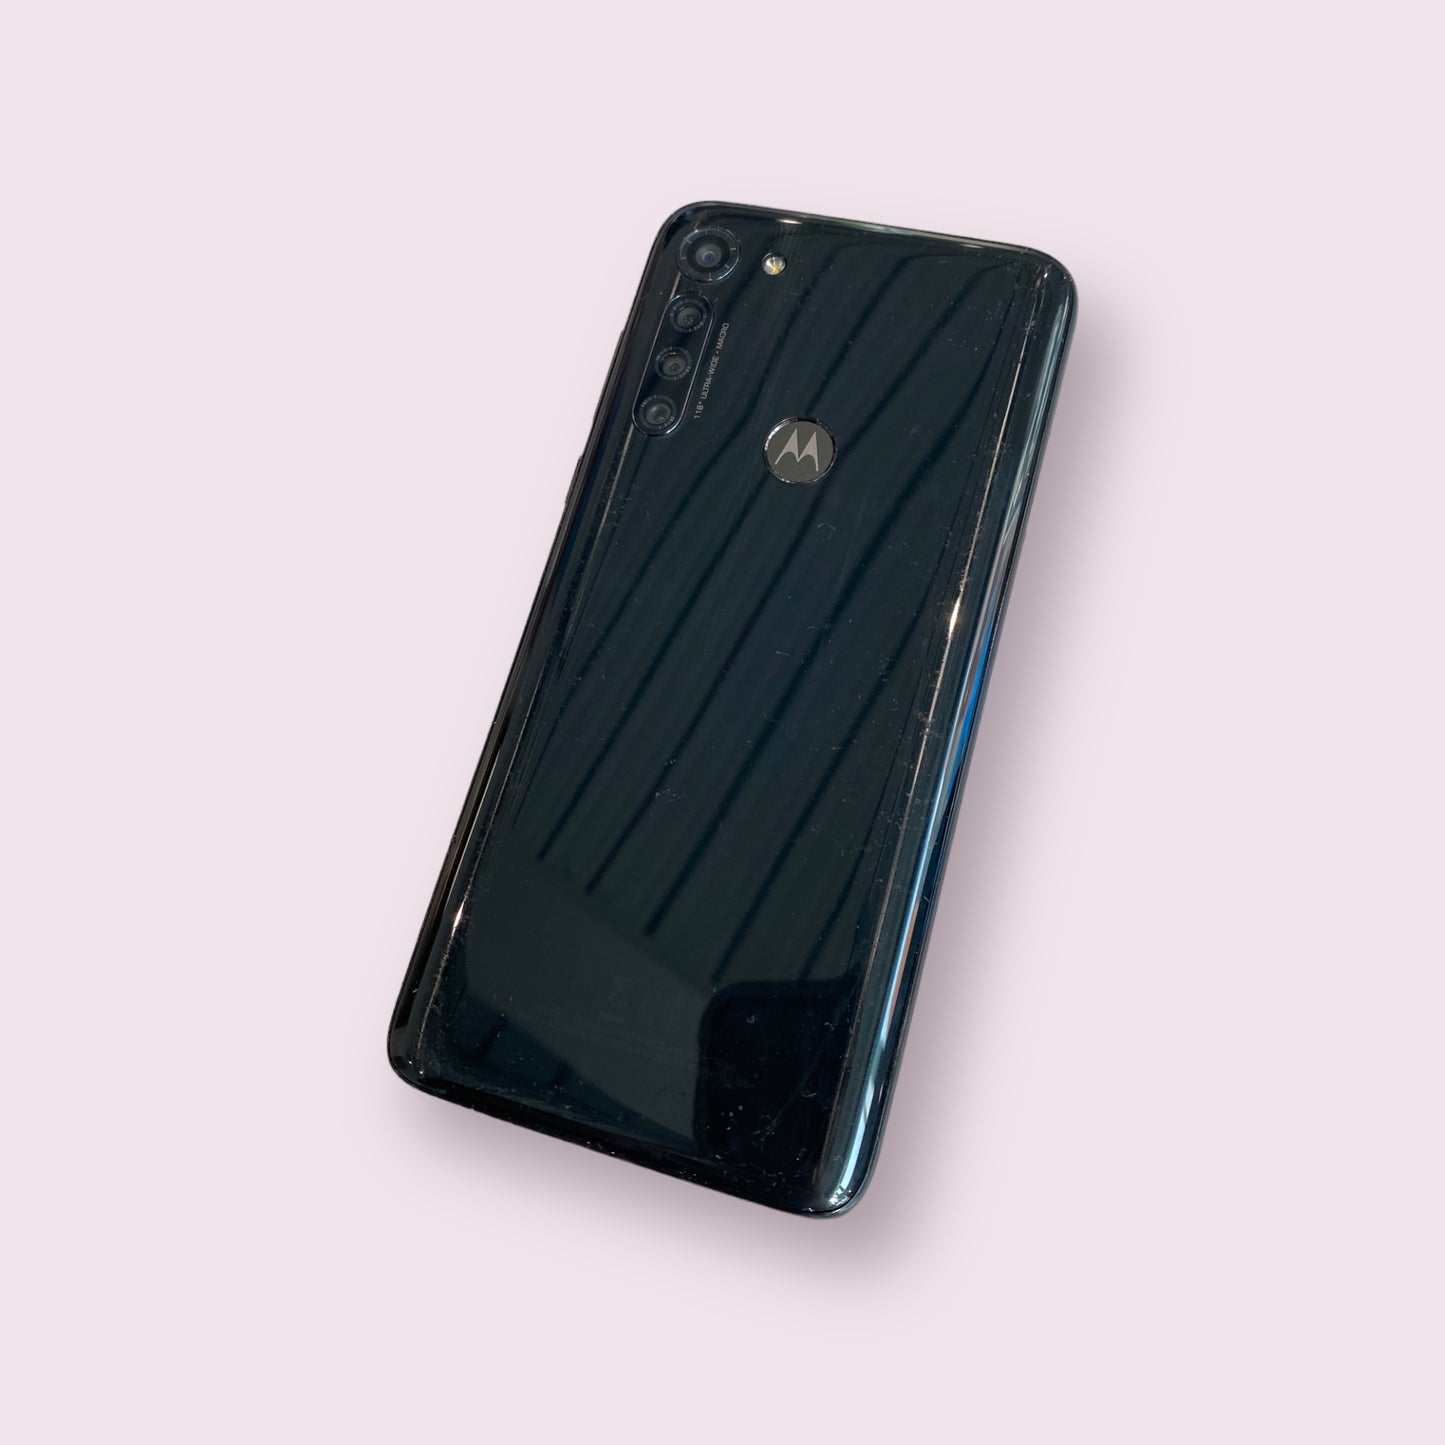 Motorola Moto G8 Power XT2041 64GB Android Smartphone Black - Unlocked - Grade B